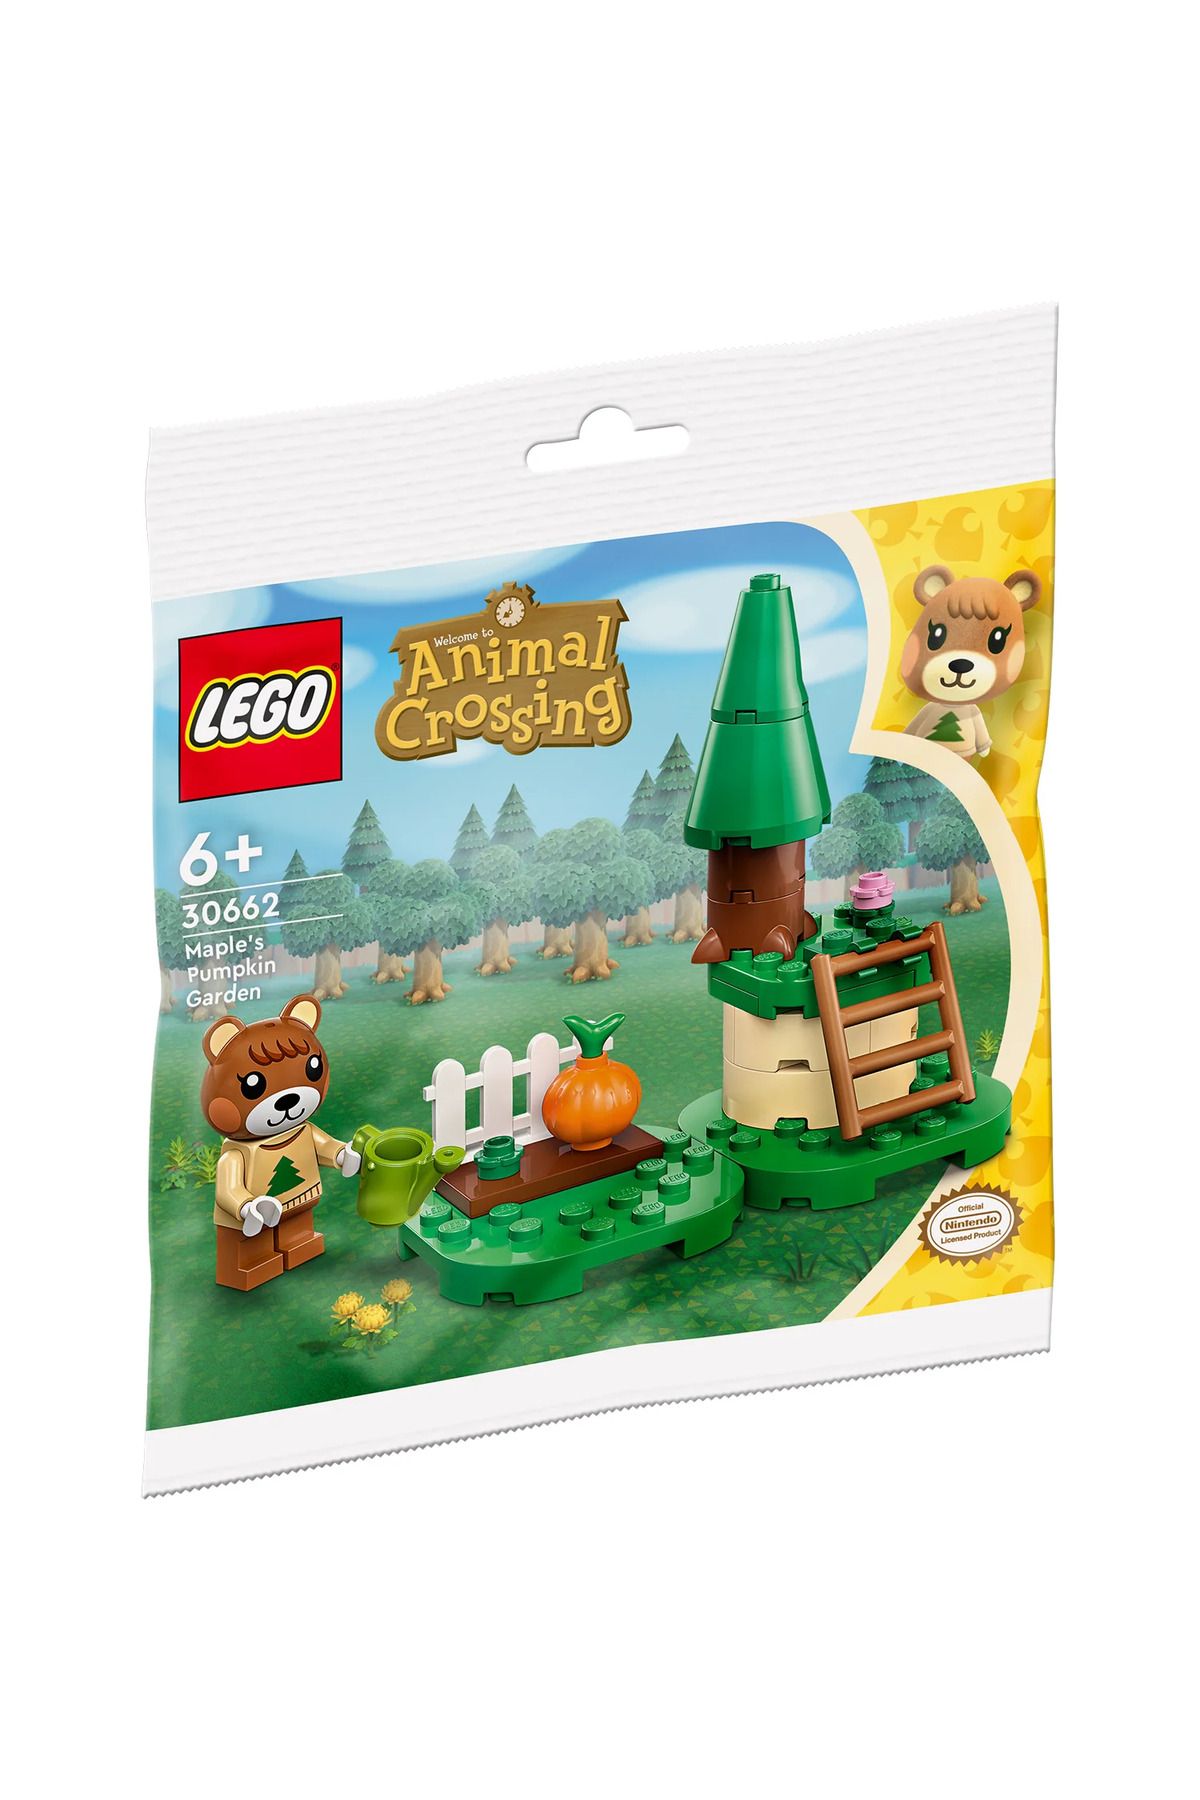 LEGO Animal Crossing 30662 Maple's Pumpkin Garden